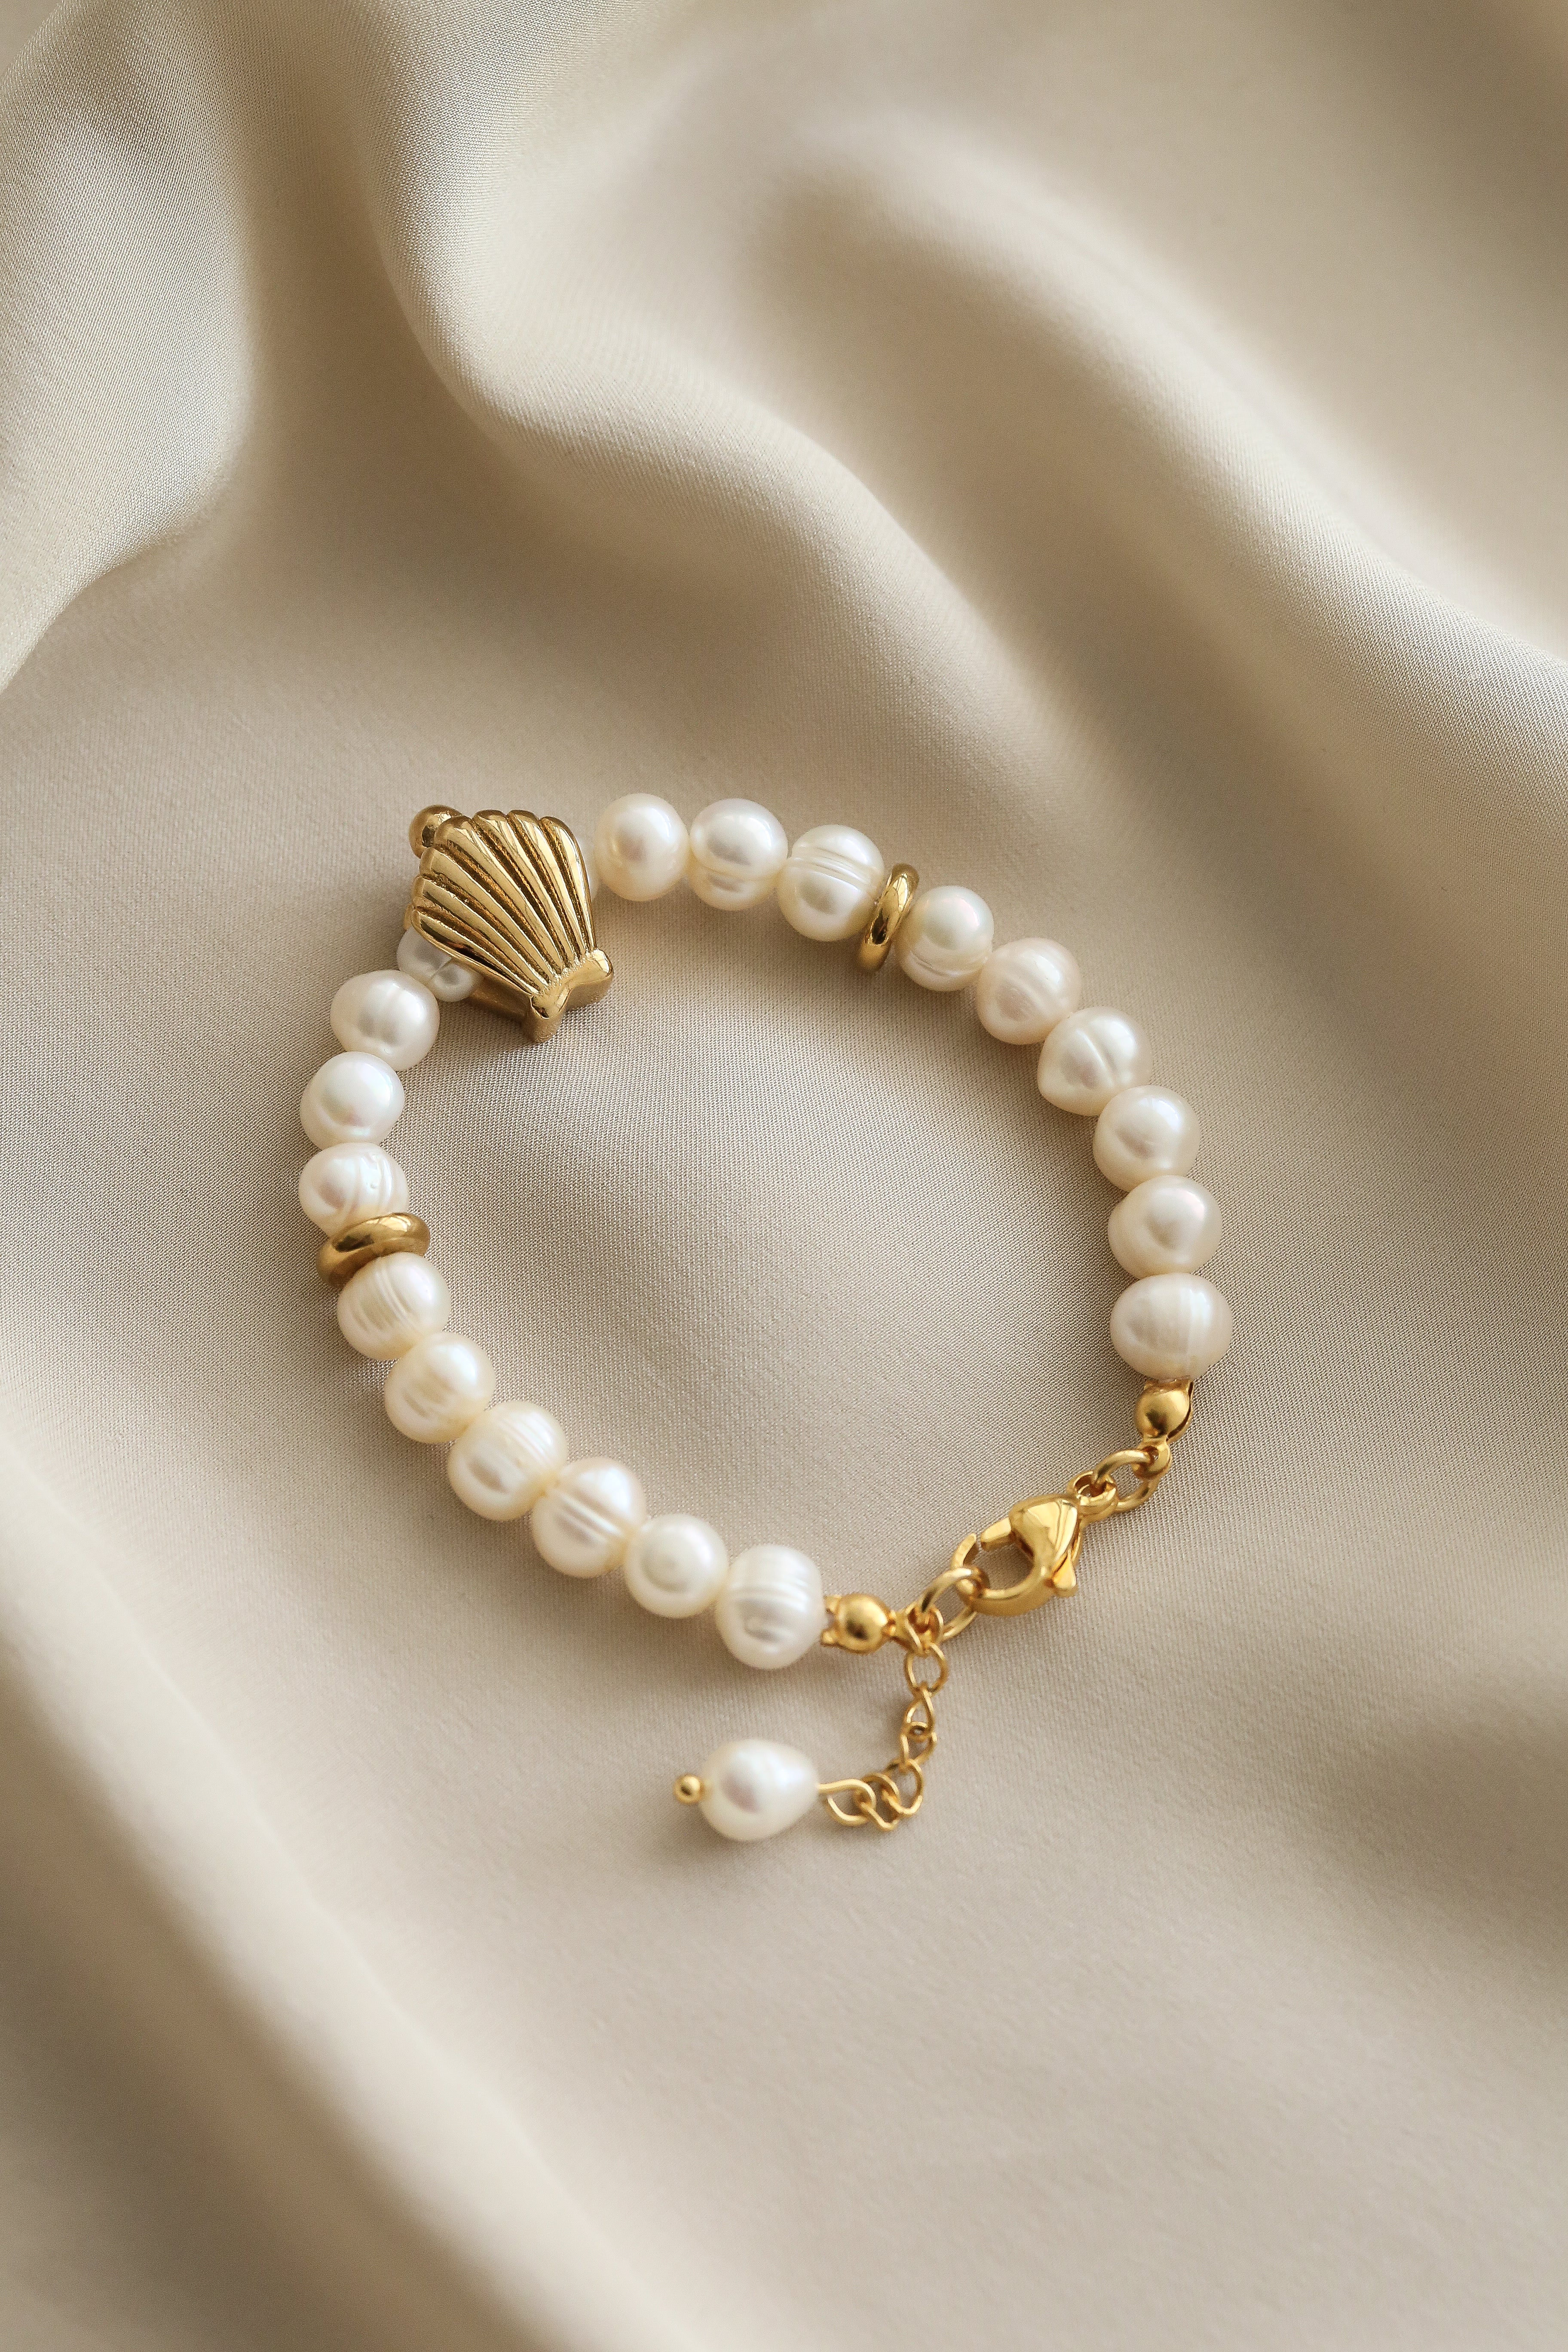 Luce Bracelet - Boutique Minimaliste has waterproof, durable, elegant and vintage inspired jewelry